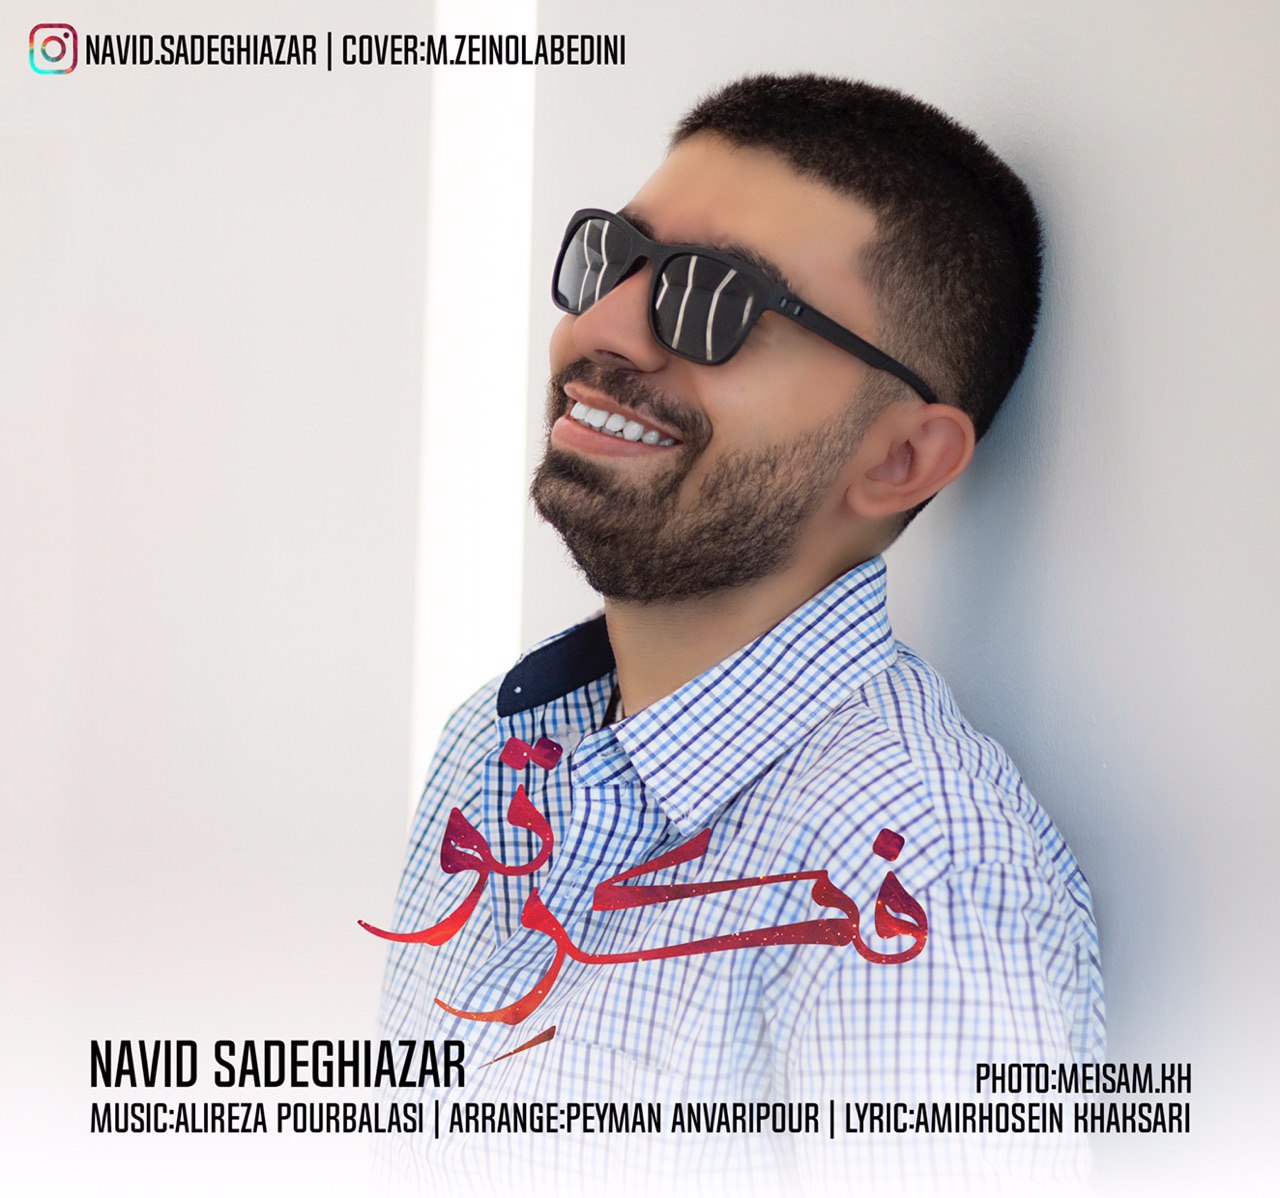  دانلود آهنگ جدید نوید صادقی آذر - فکر تو | Download New Music By Navid Sadeghiazar - Fekre To